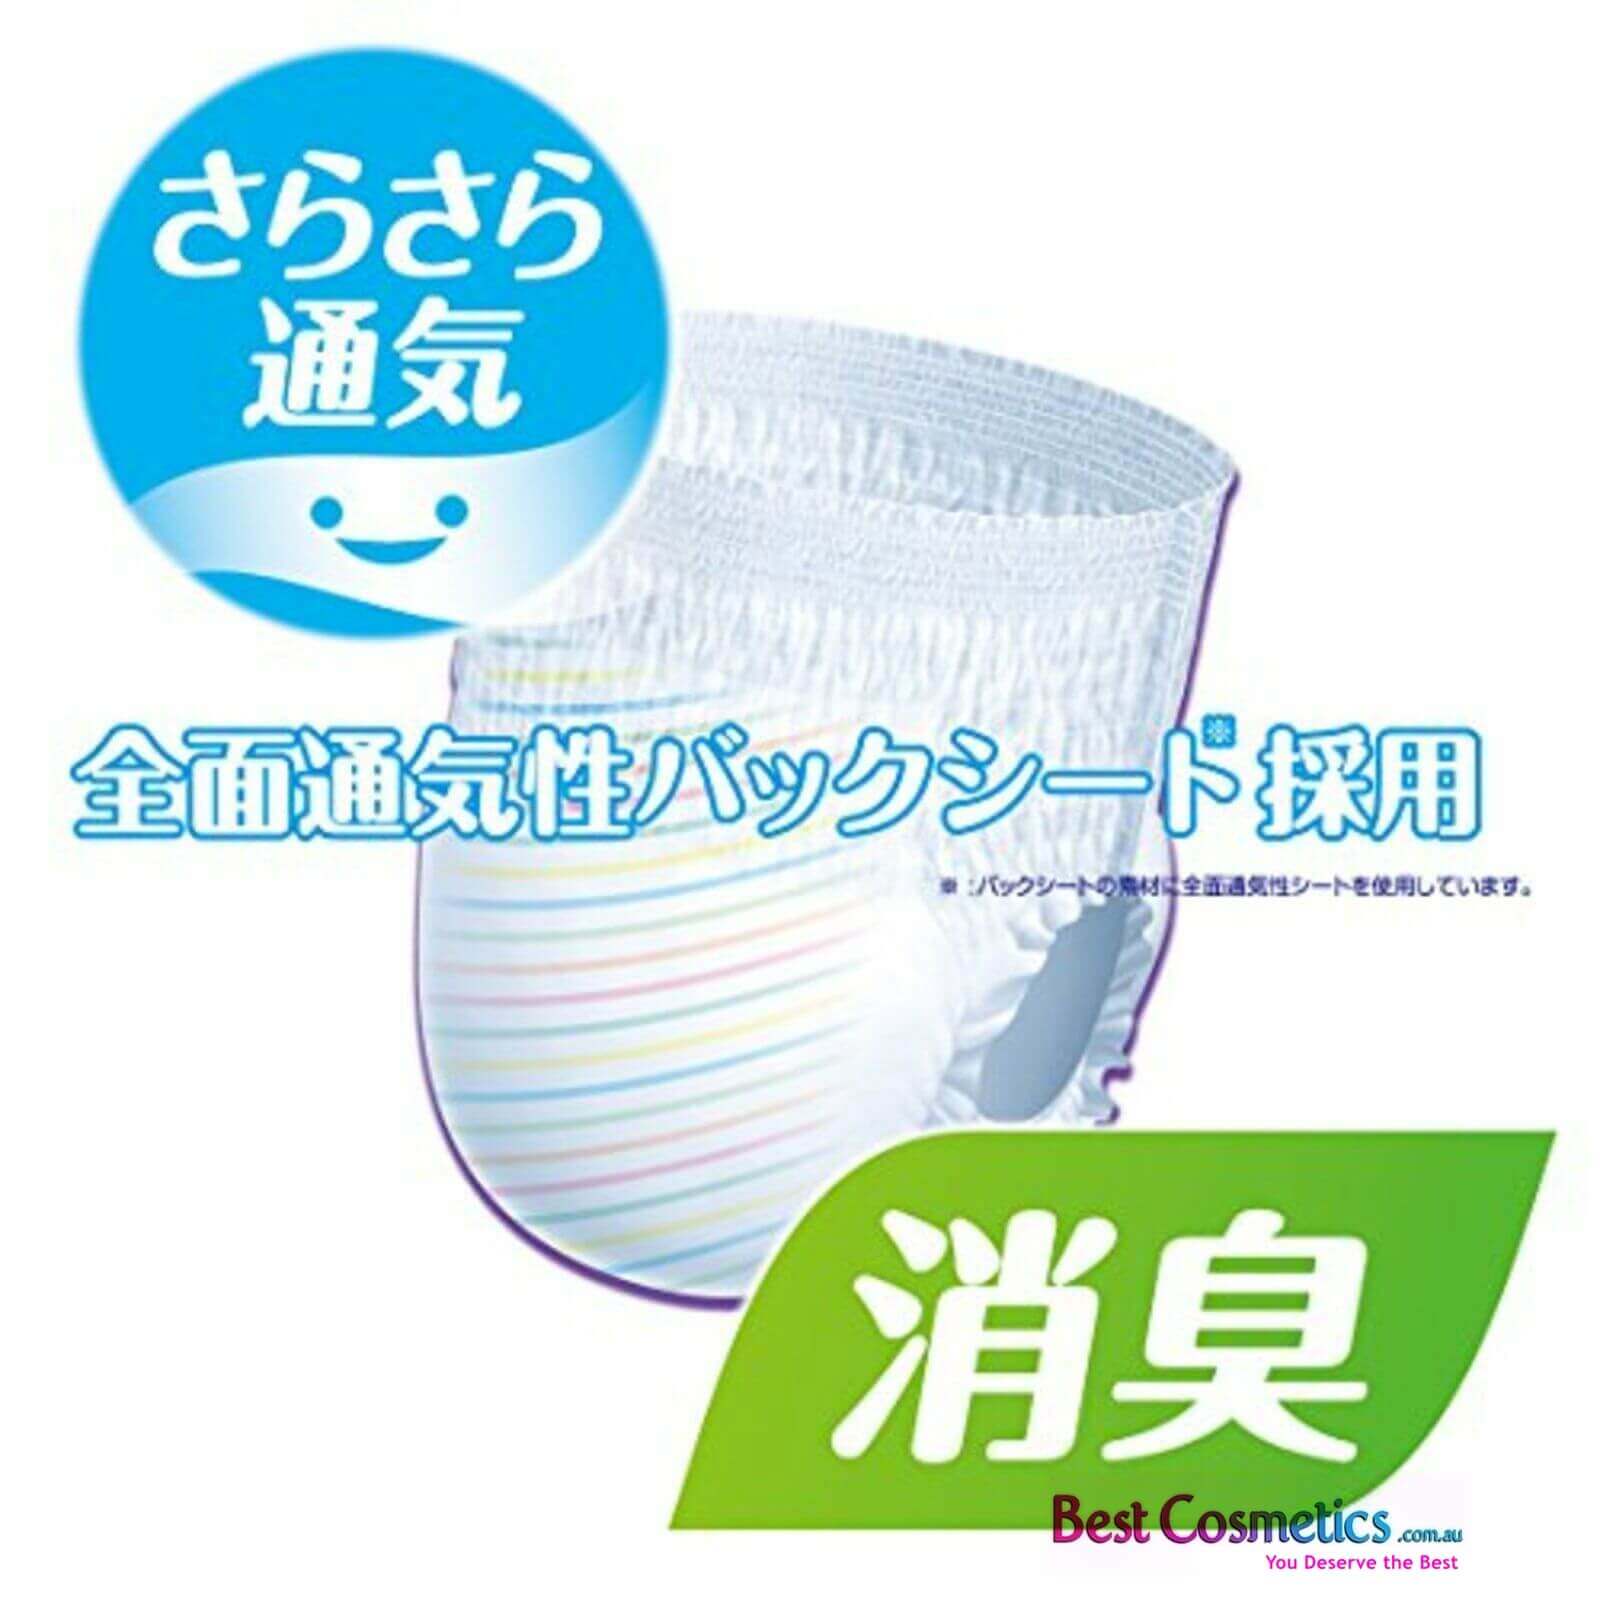 GOO.N Deodorant Pants/Pull Ups Size XXXL for 15-35kg Children & Adults 1 Pack(14 PCs) of Daio Paper